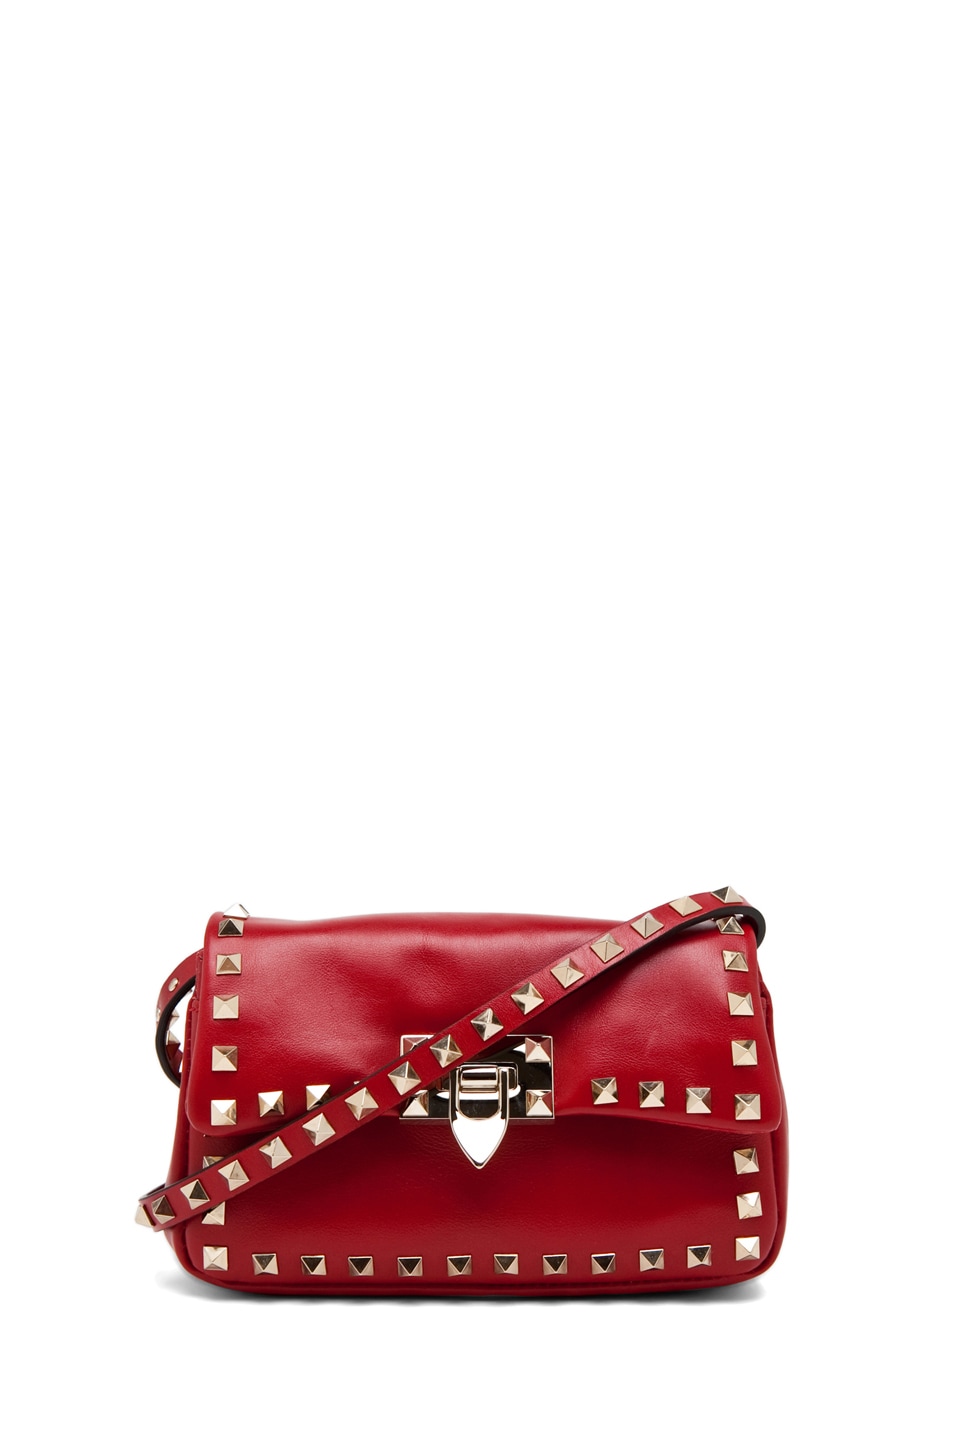 Valentino Rockstud Flap Bag in Red | FWRD